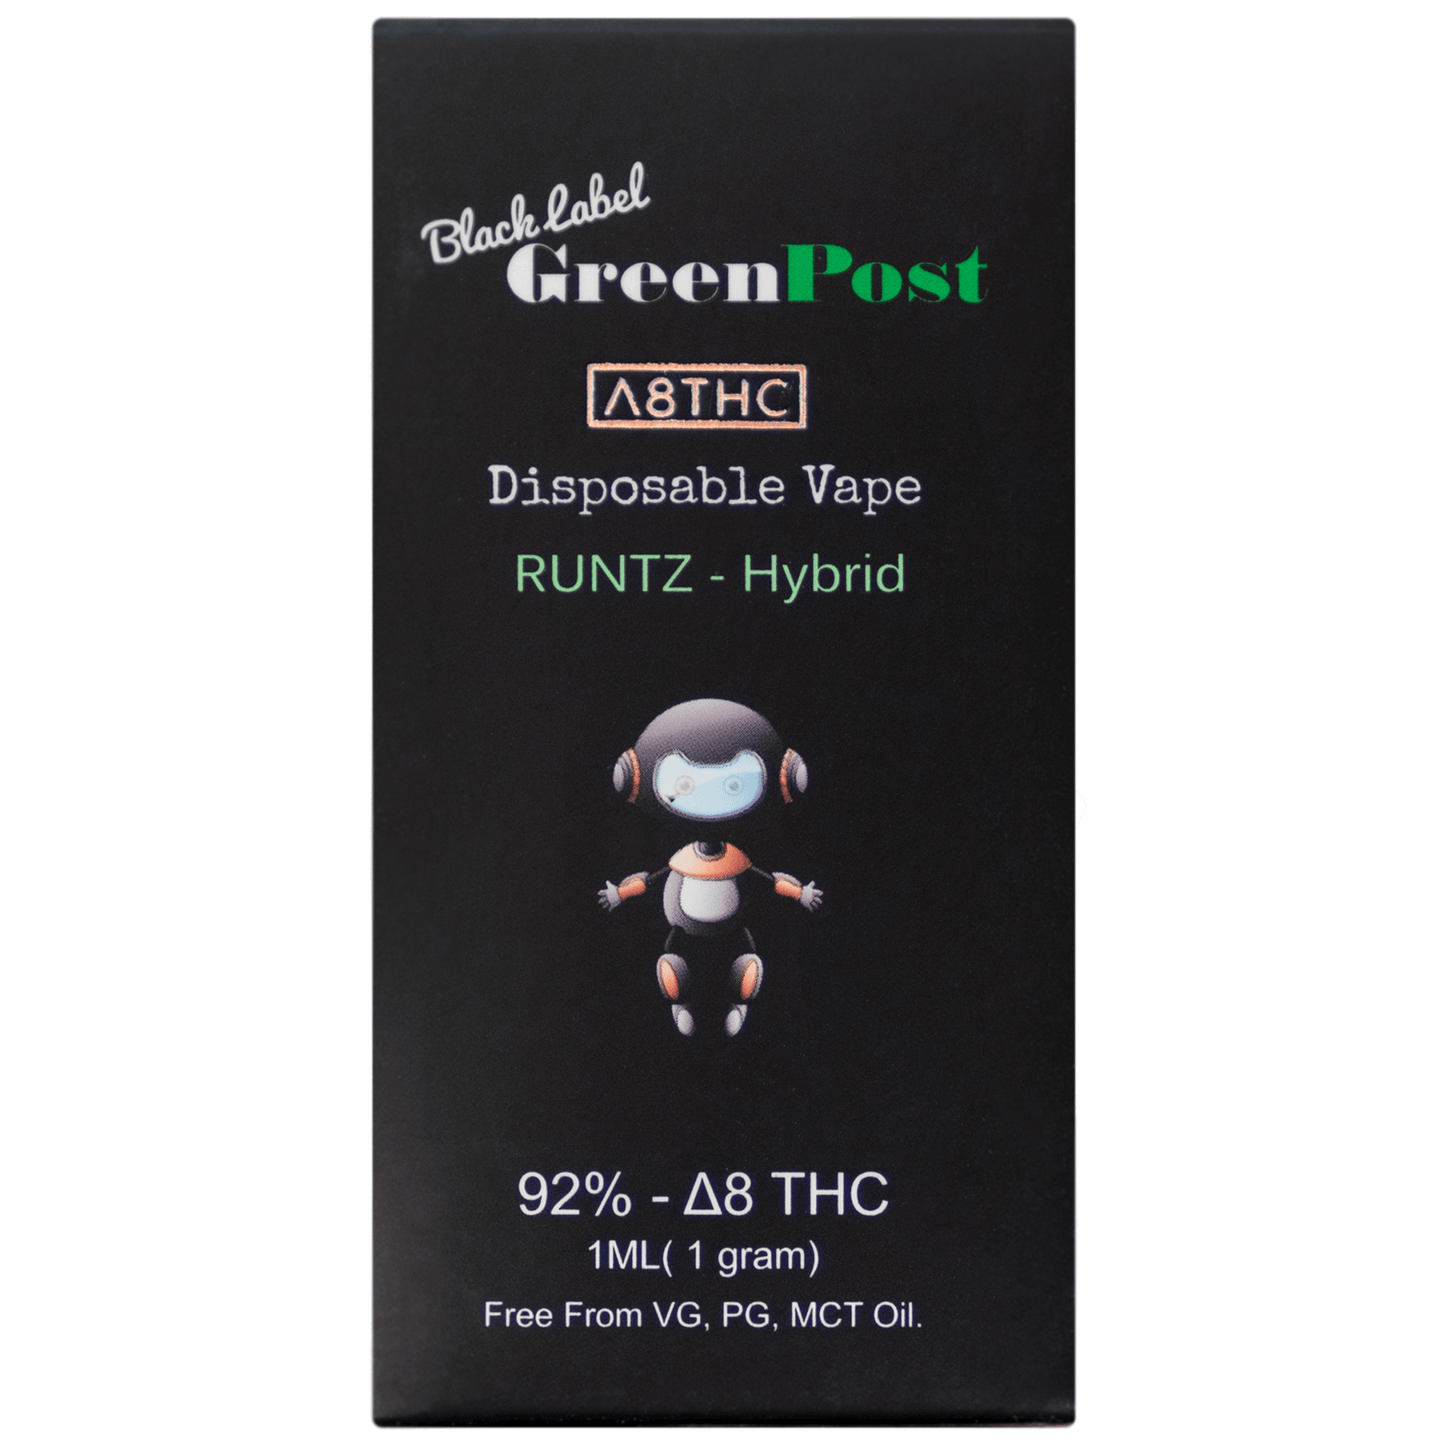 Black Label Runtz Delta 8 Disposable Vape (Hybrid) - GreenPost CBD - www.GreenPostCBD.com